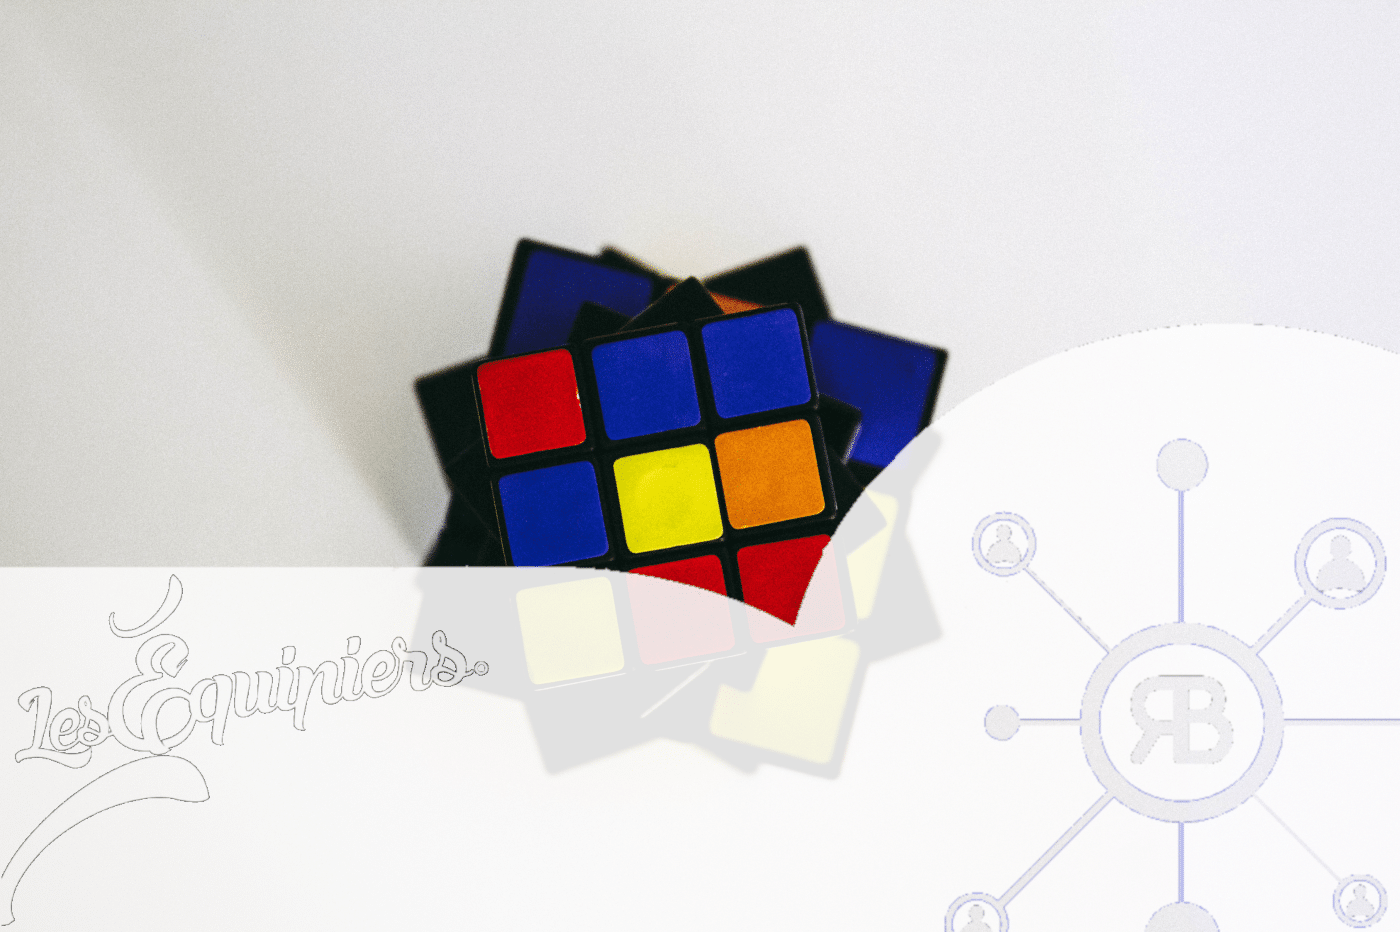 Rubix-cube logo Les Equipiers et Richard Bulan